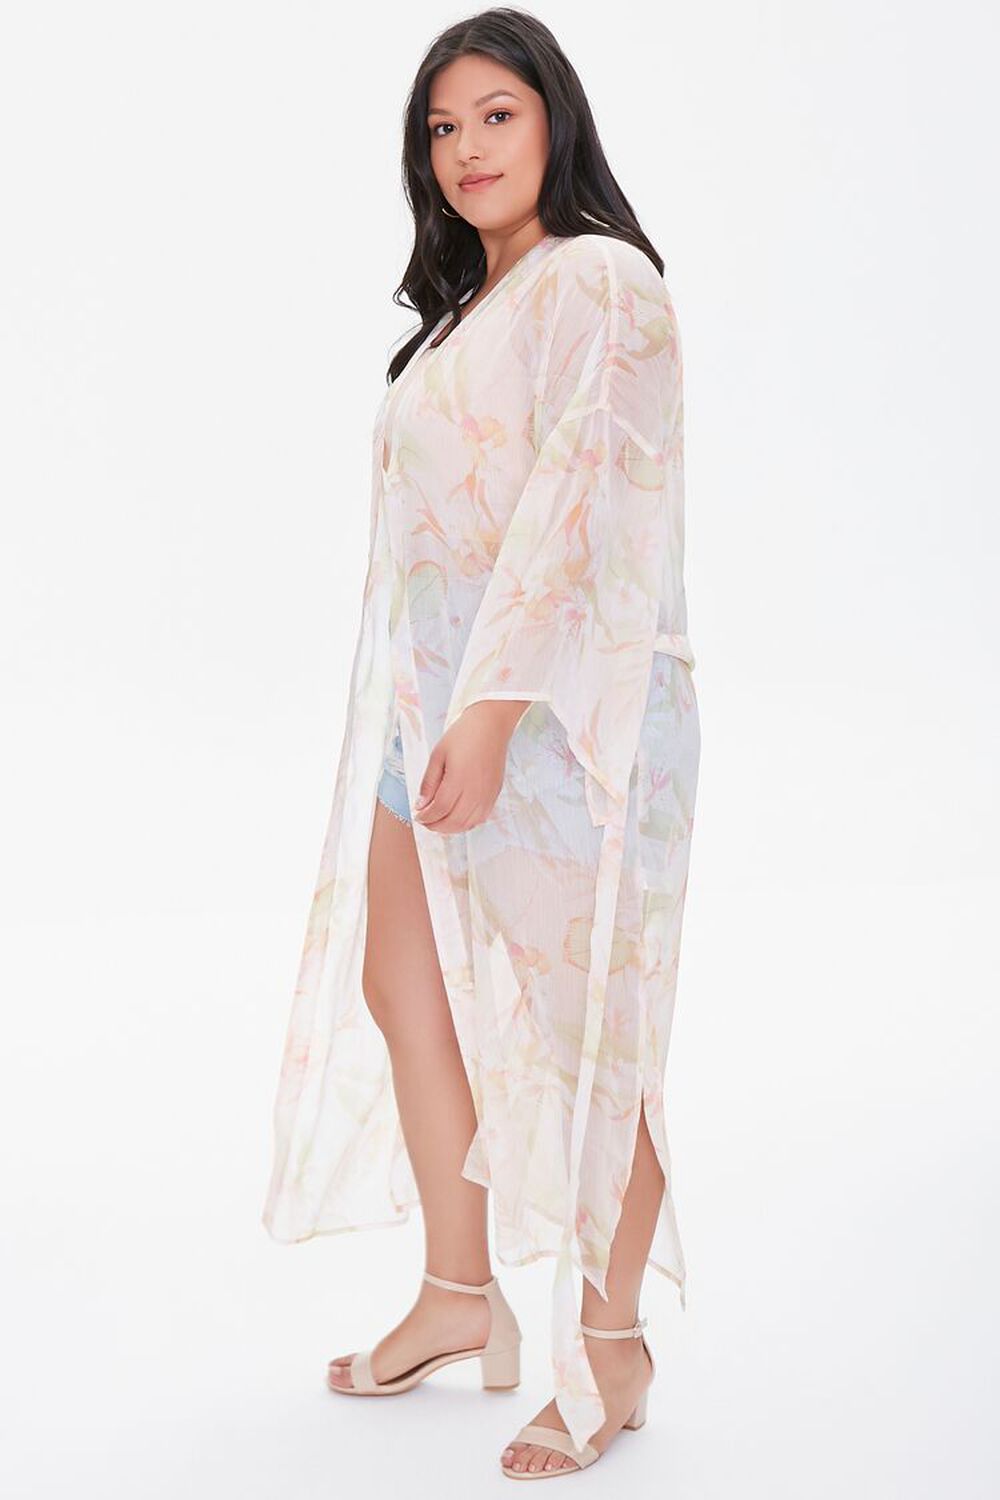 BLUSH/MULTI Plus Size Tropical Floral Kimono, image 2